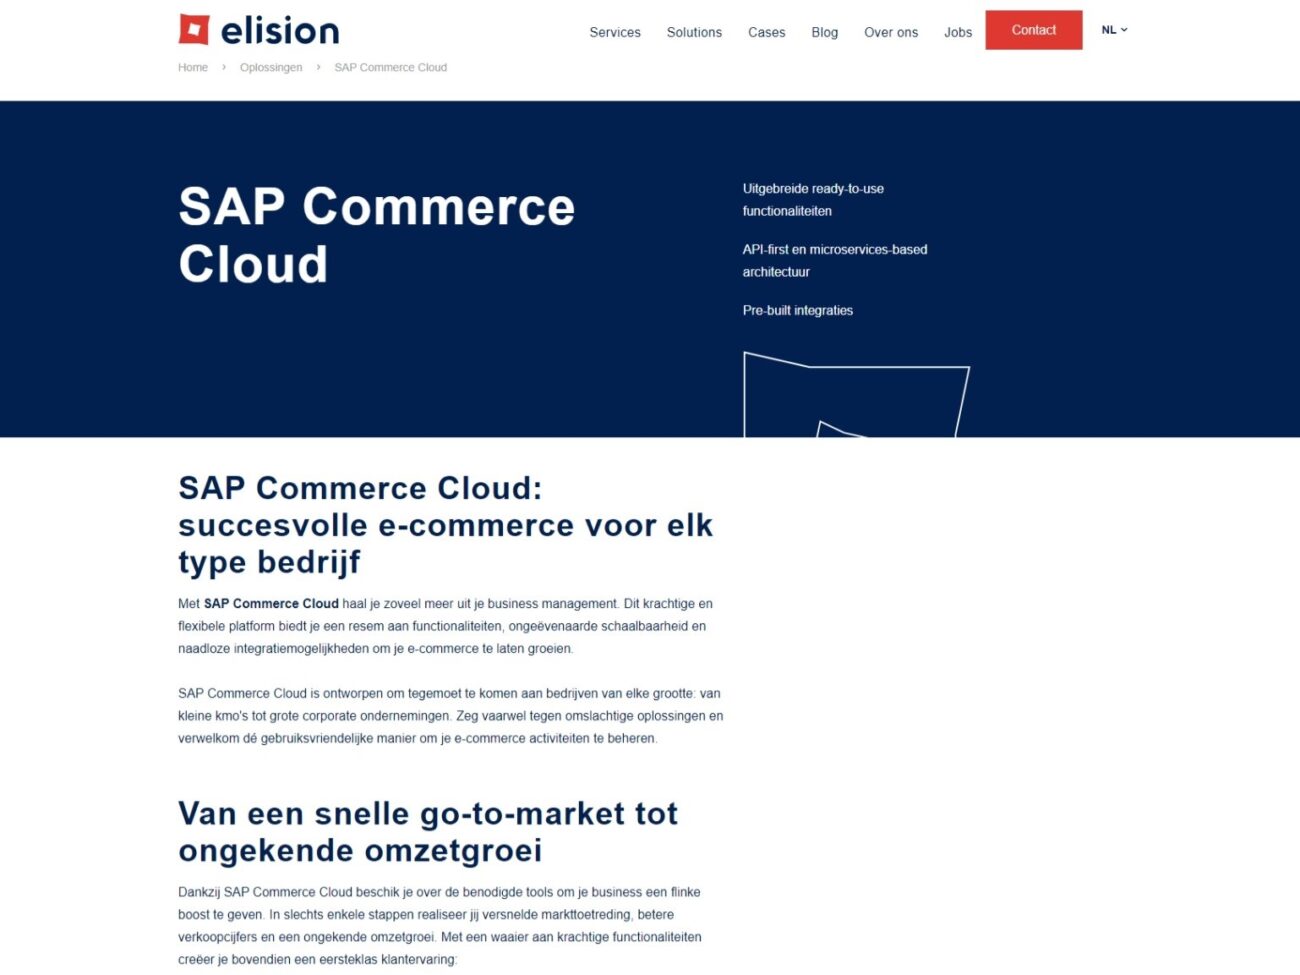 sap commerce cloud